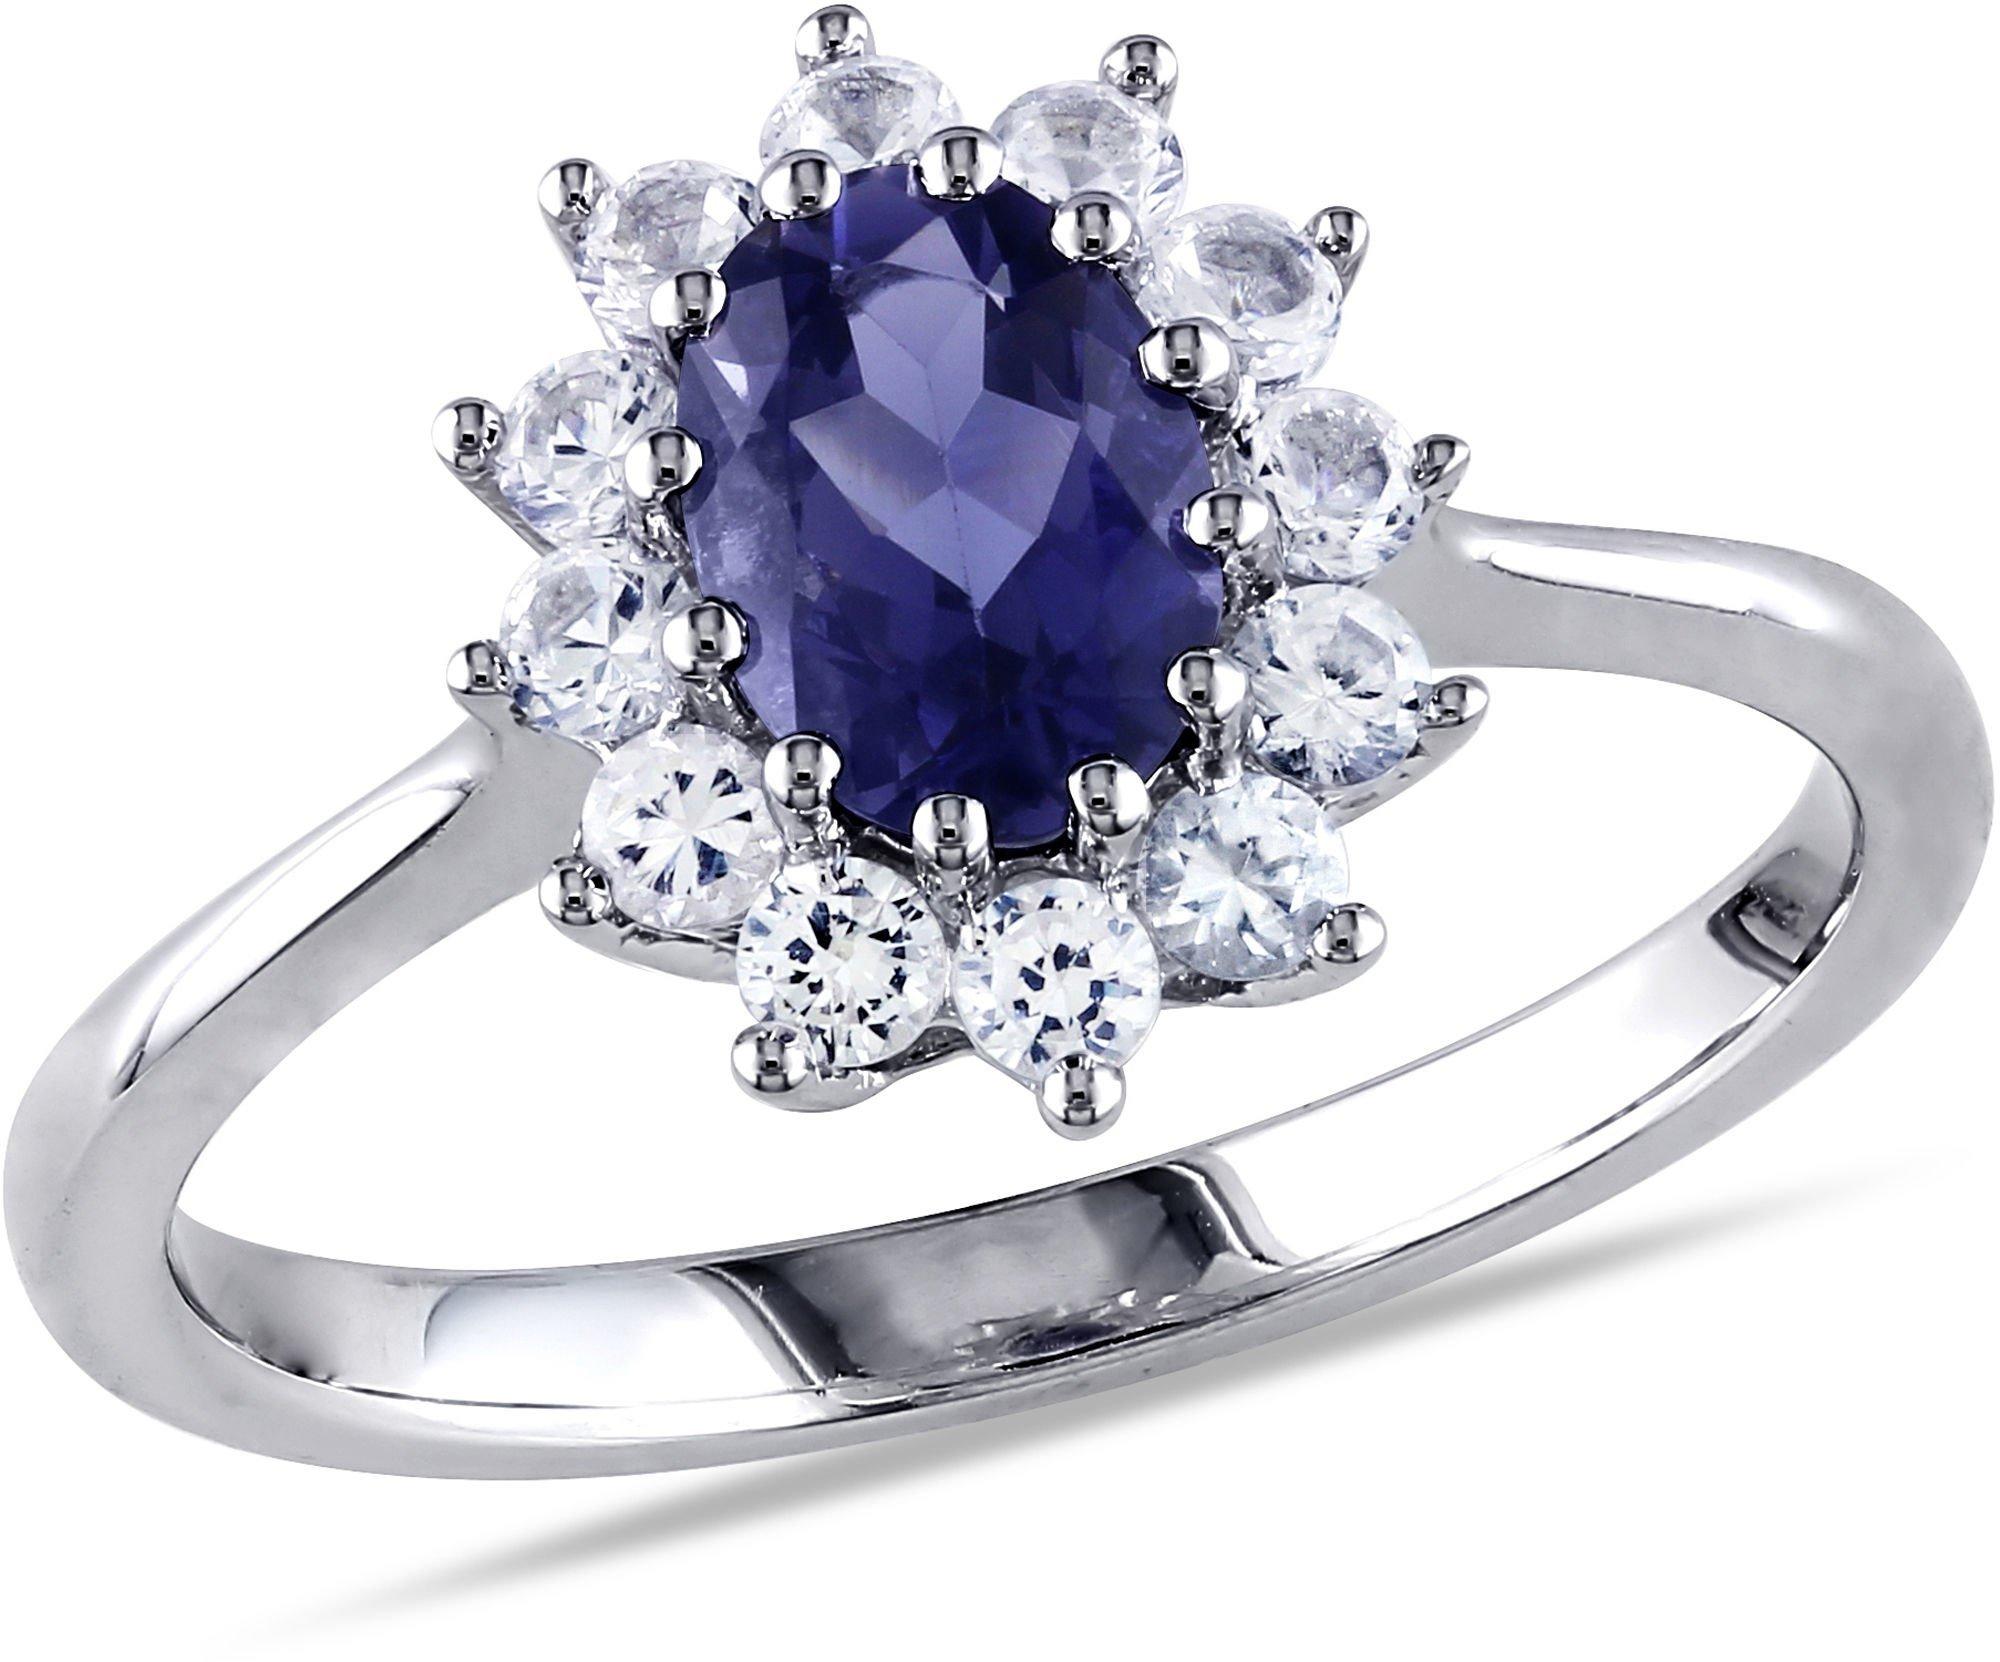 1 1/4-ct. T.G.W. Lolite Blue Sapphire Ring